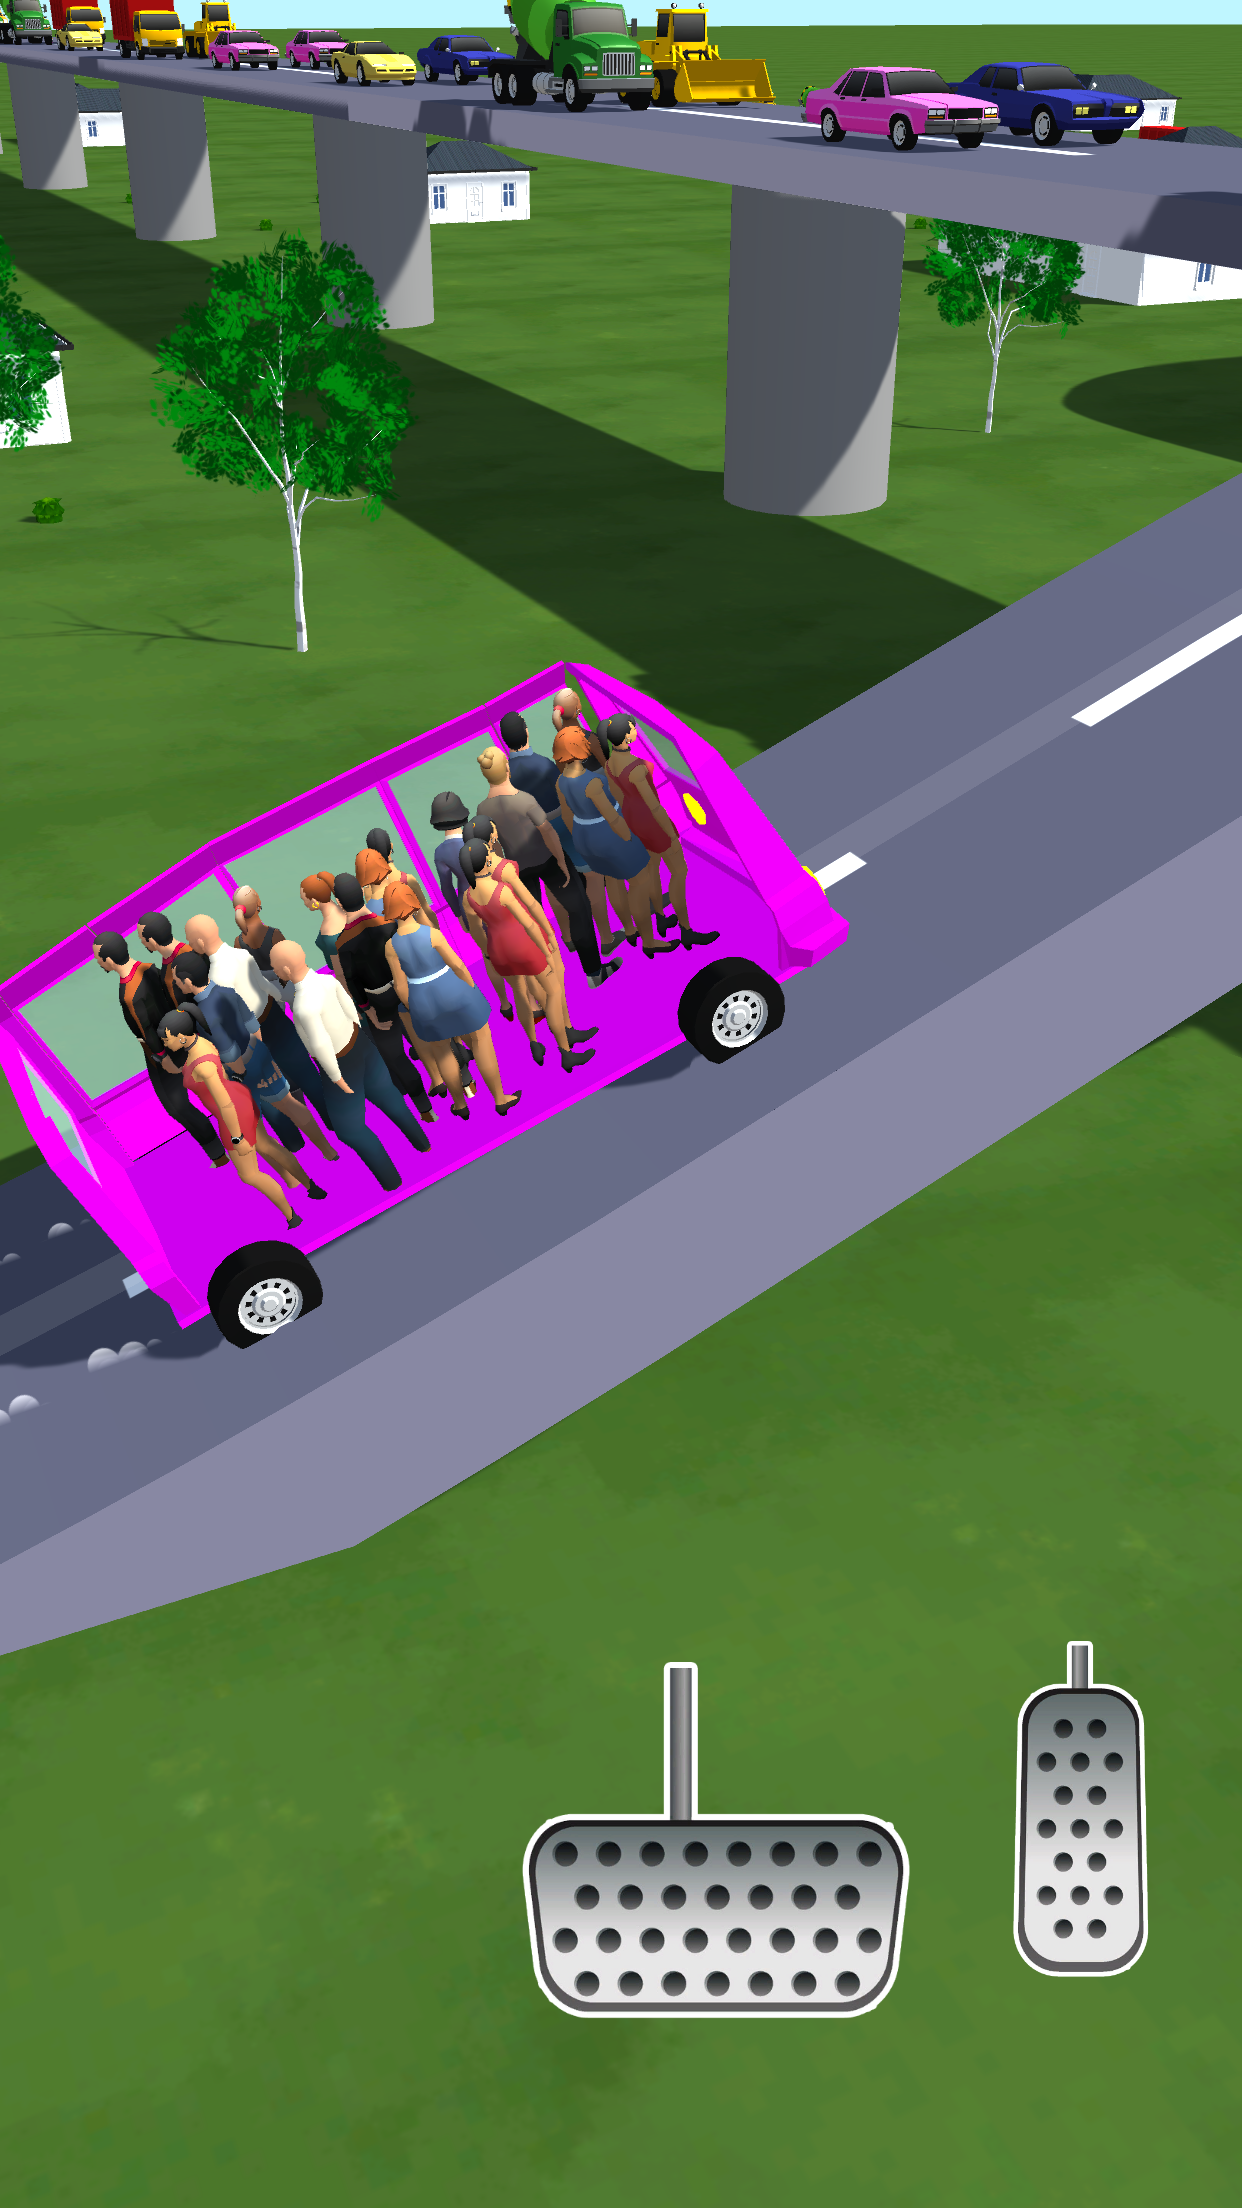 Screenshot 1 of Arrivo in autobus 3.0.7